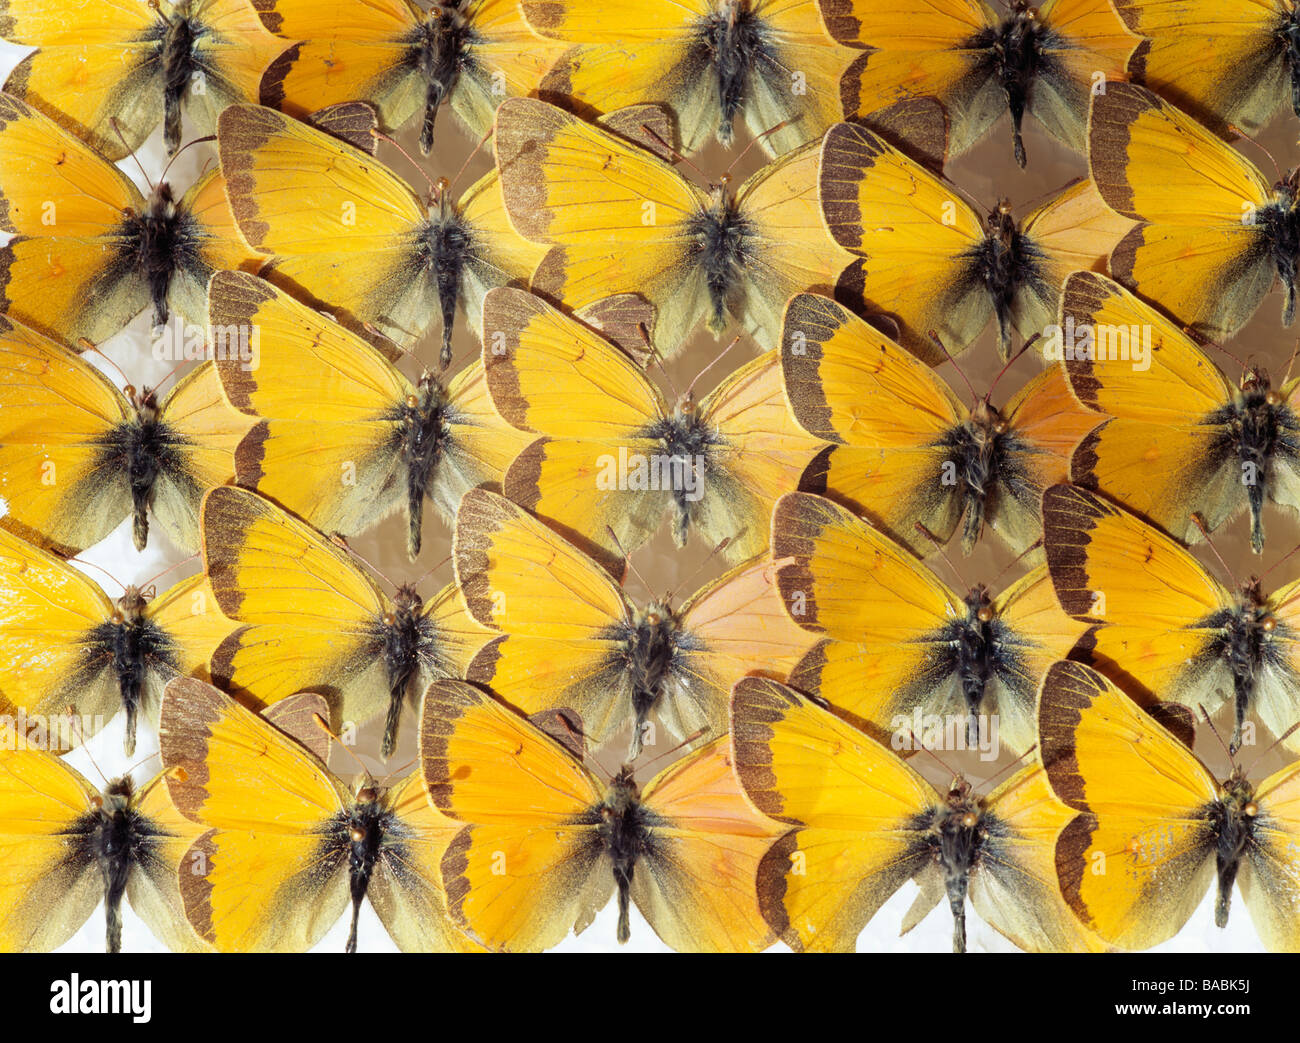 Butterflies arranged in row Stock Photo